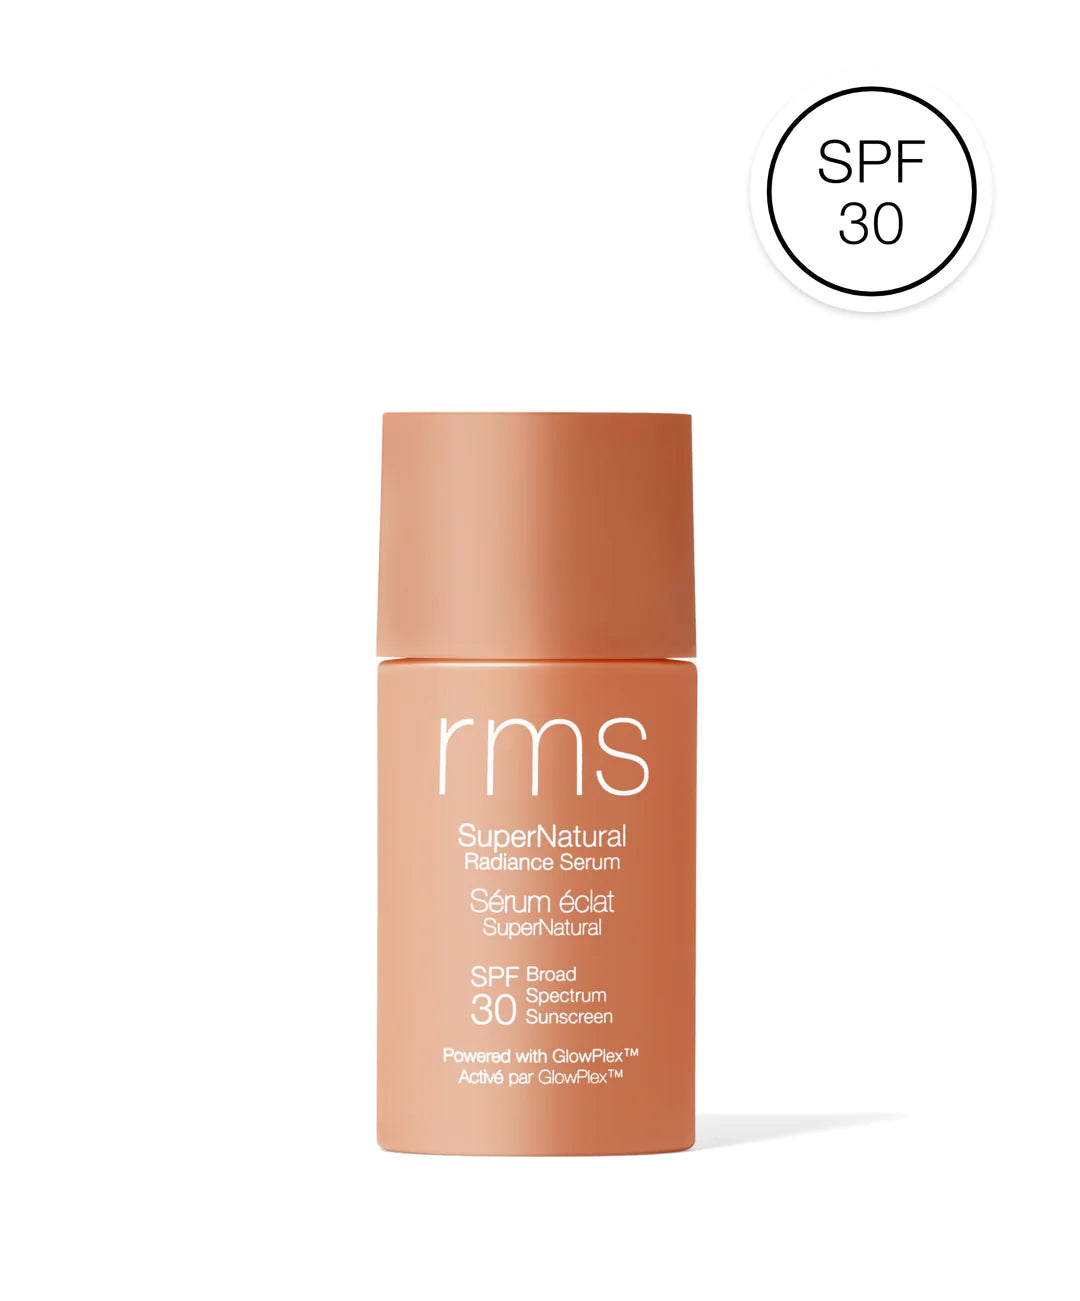 SuperNatural Radiance Serum SPF 30 Sunscreen